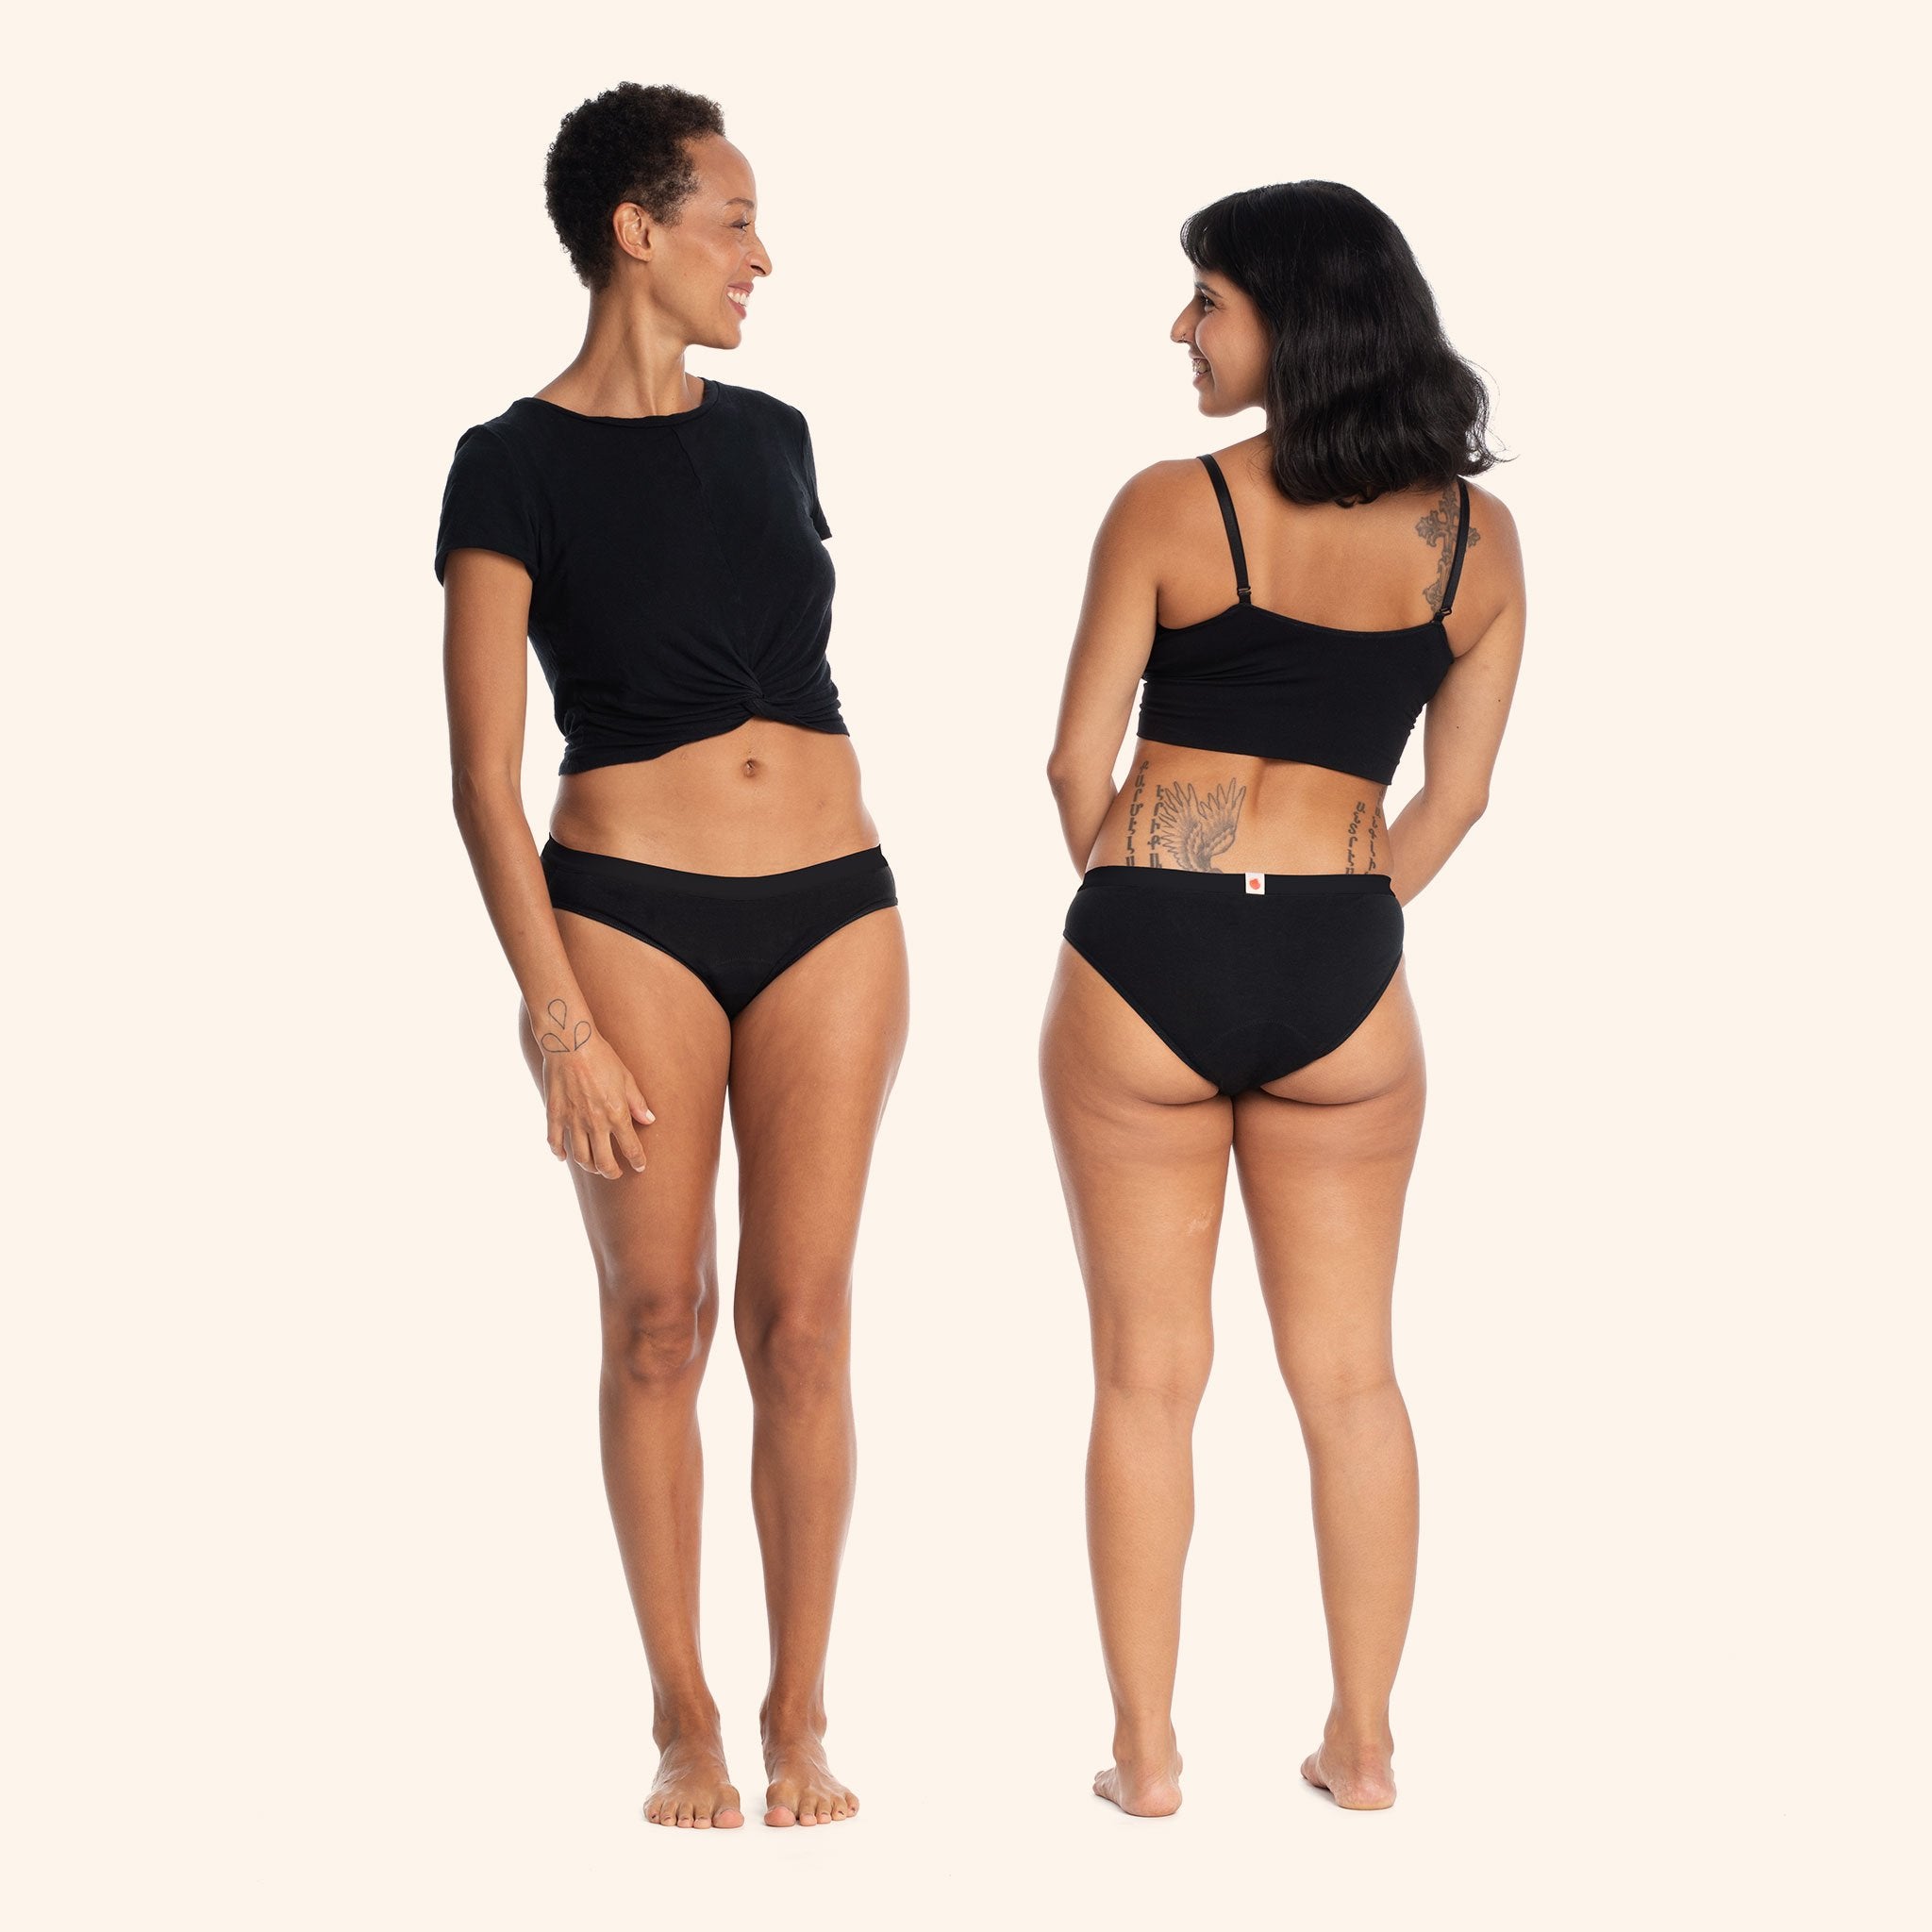 Deux femmes qui portent des culottes menstruelles noires